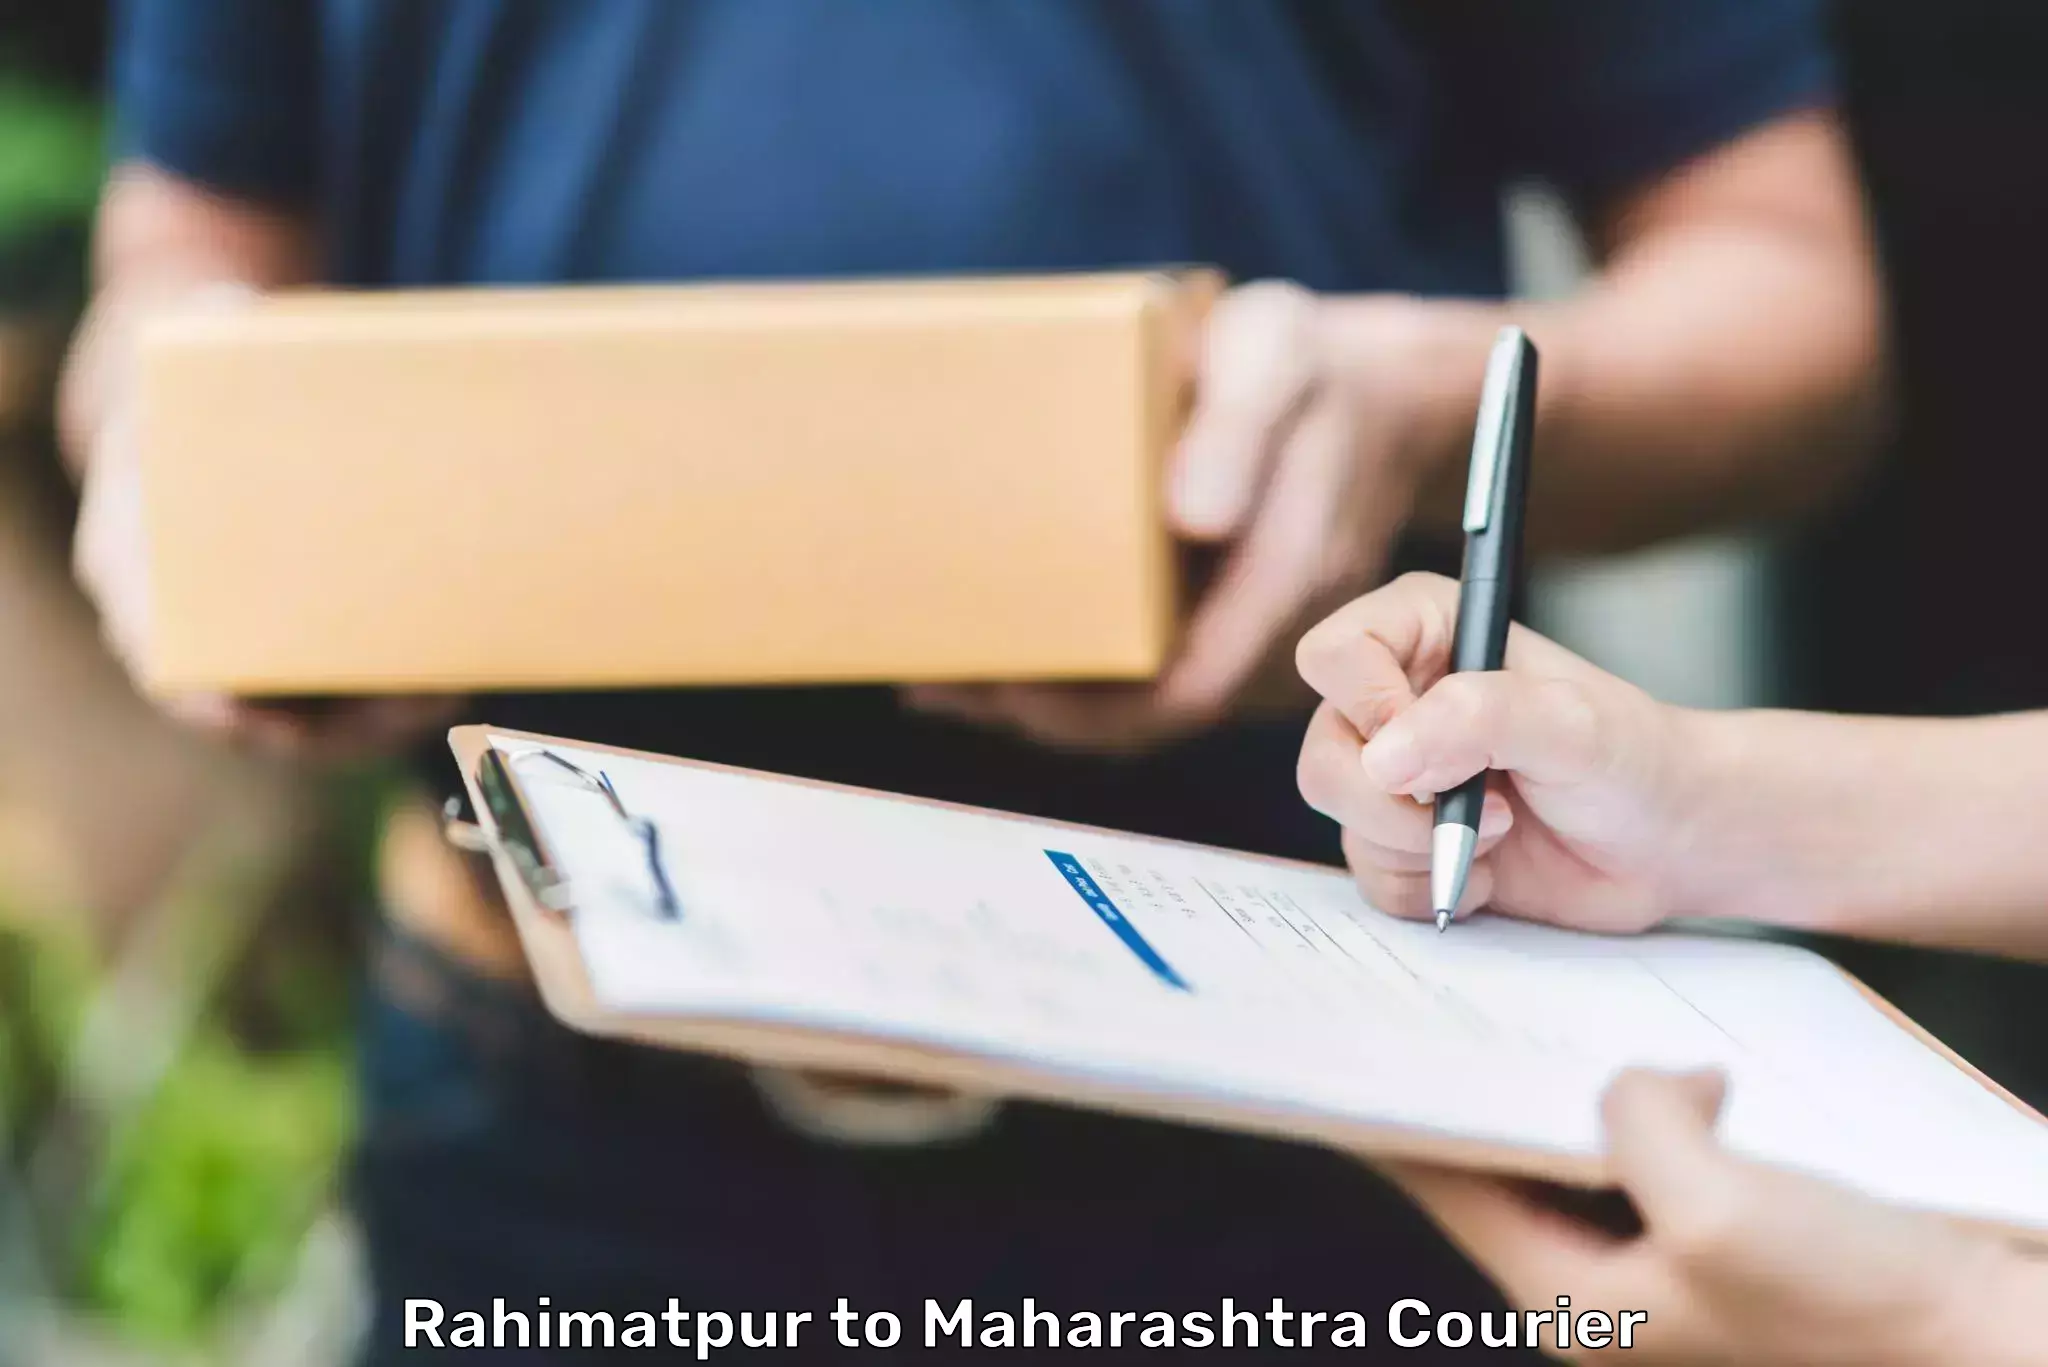 Courier service booking Rahimatpur to Bhokar